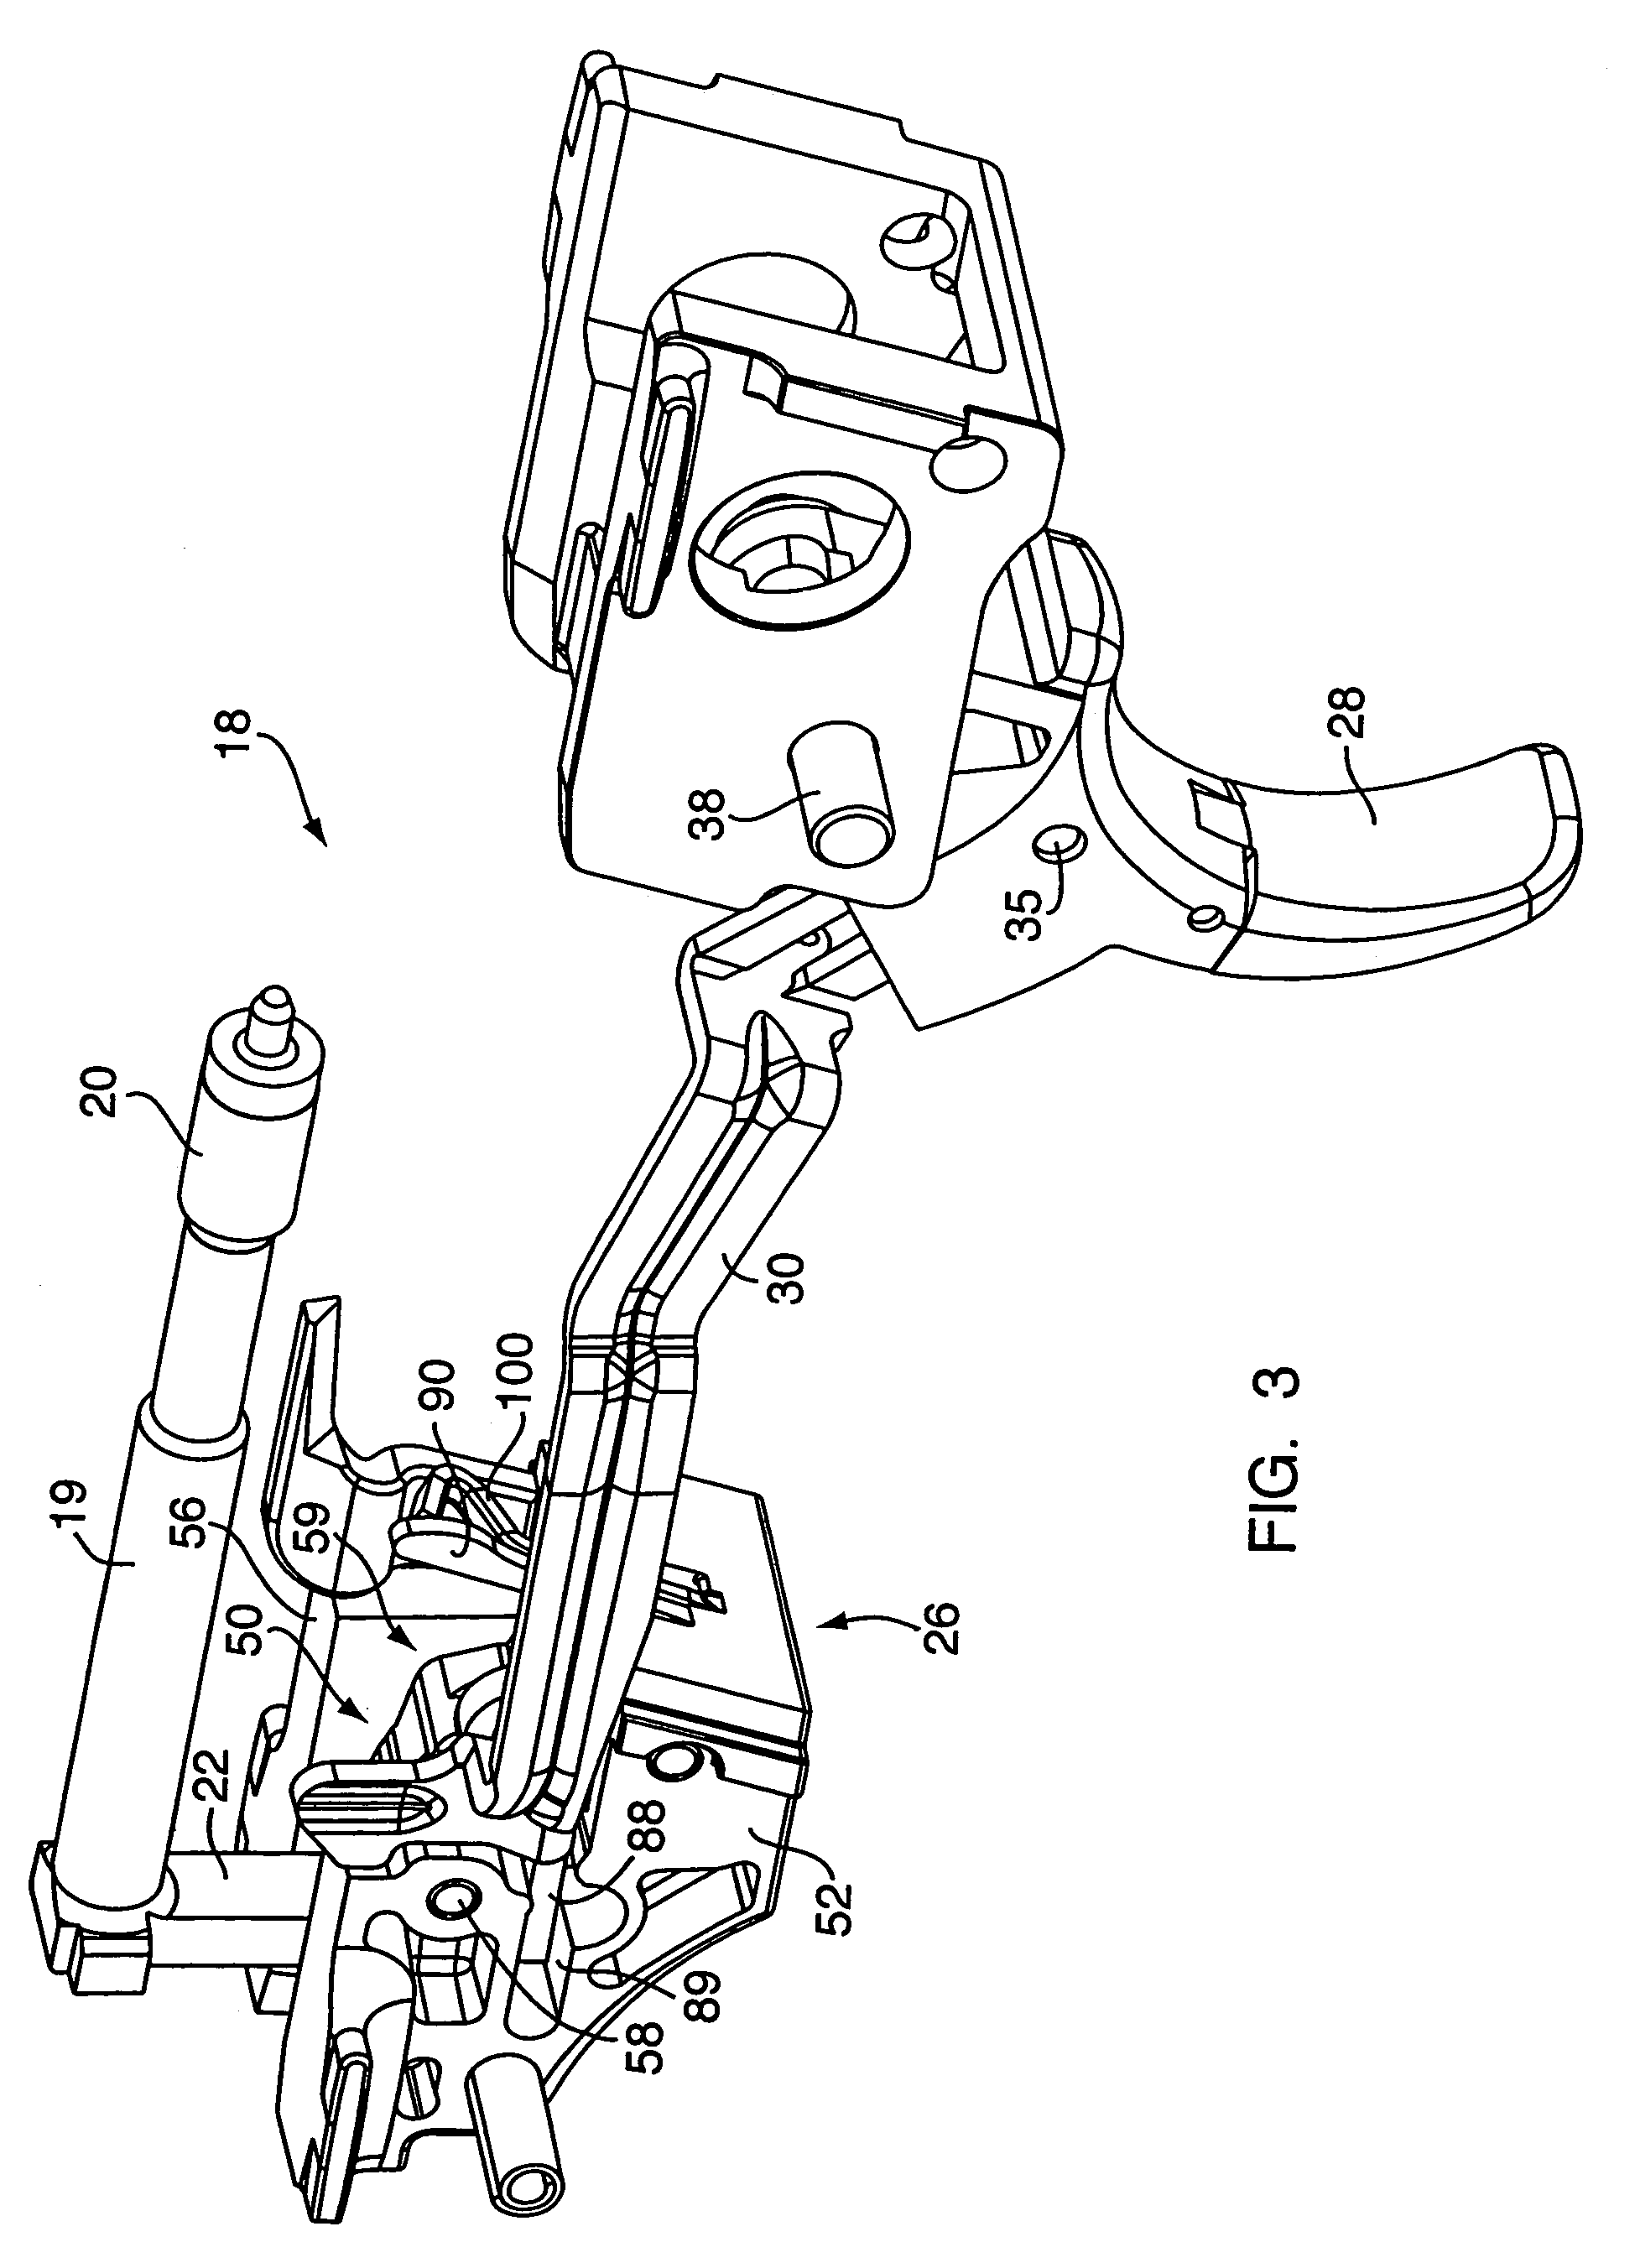 Fire control mechanism for a firearm